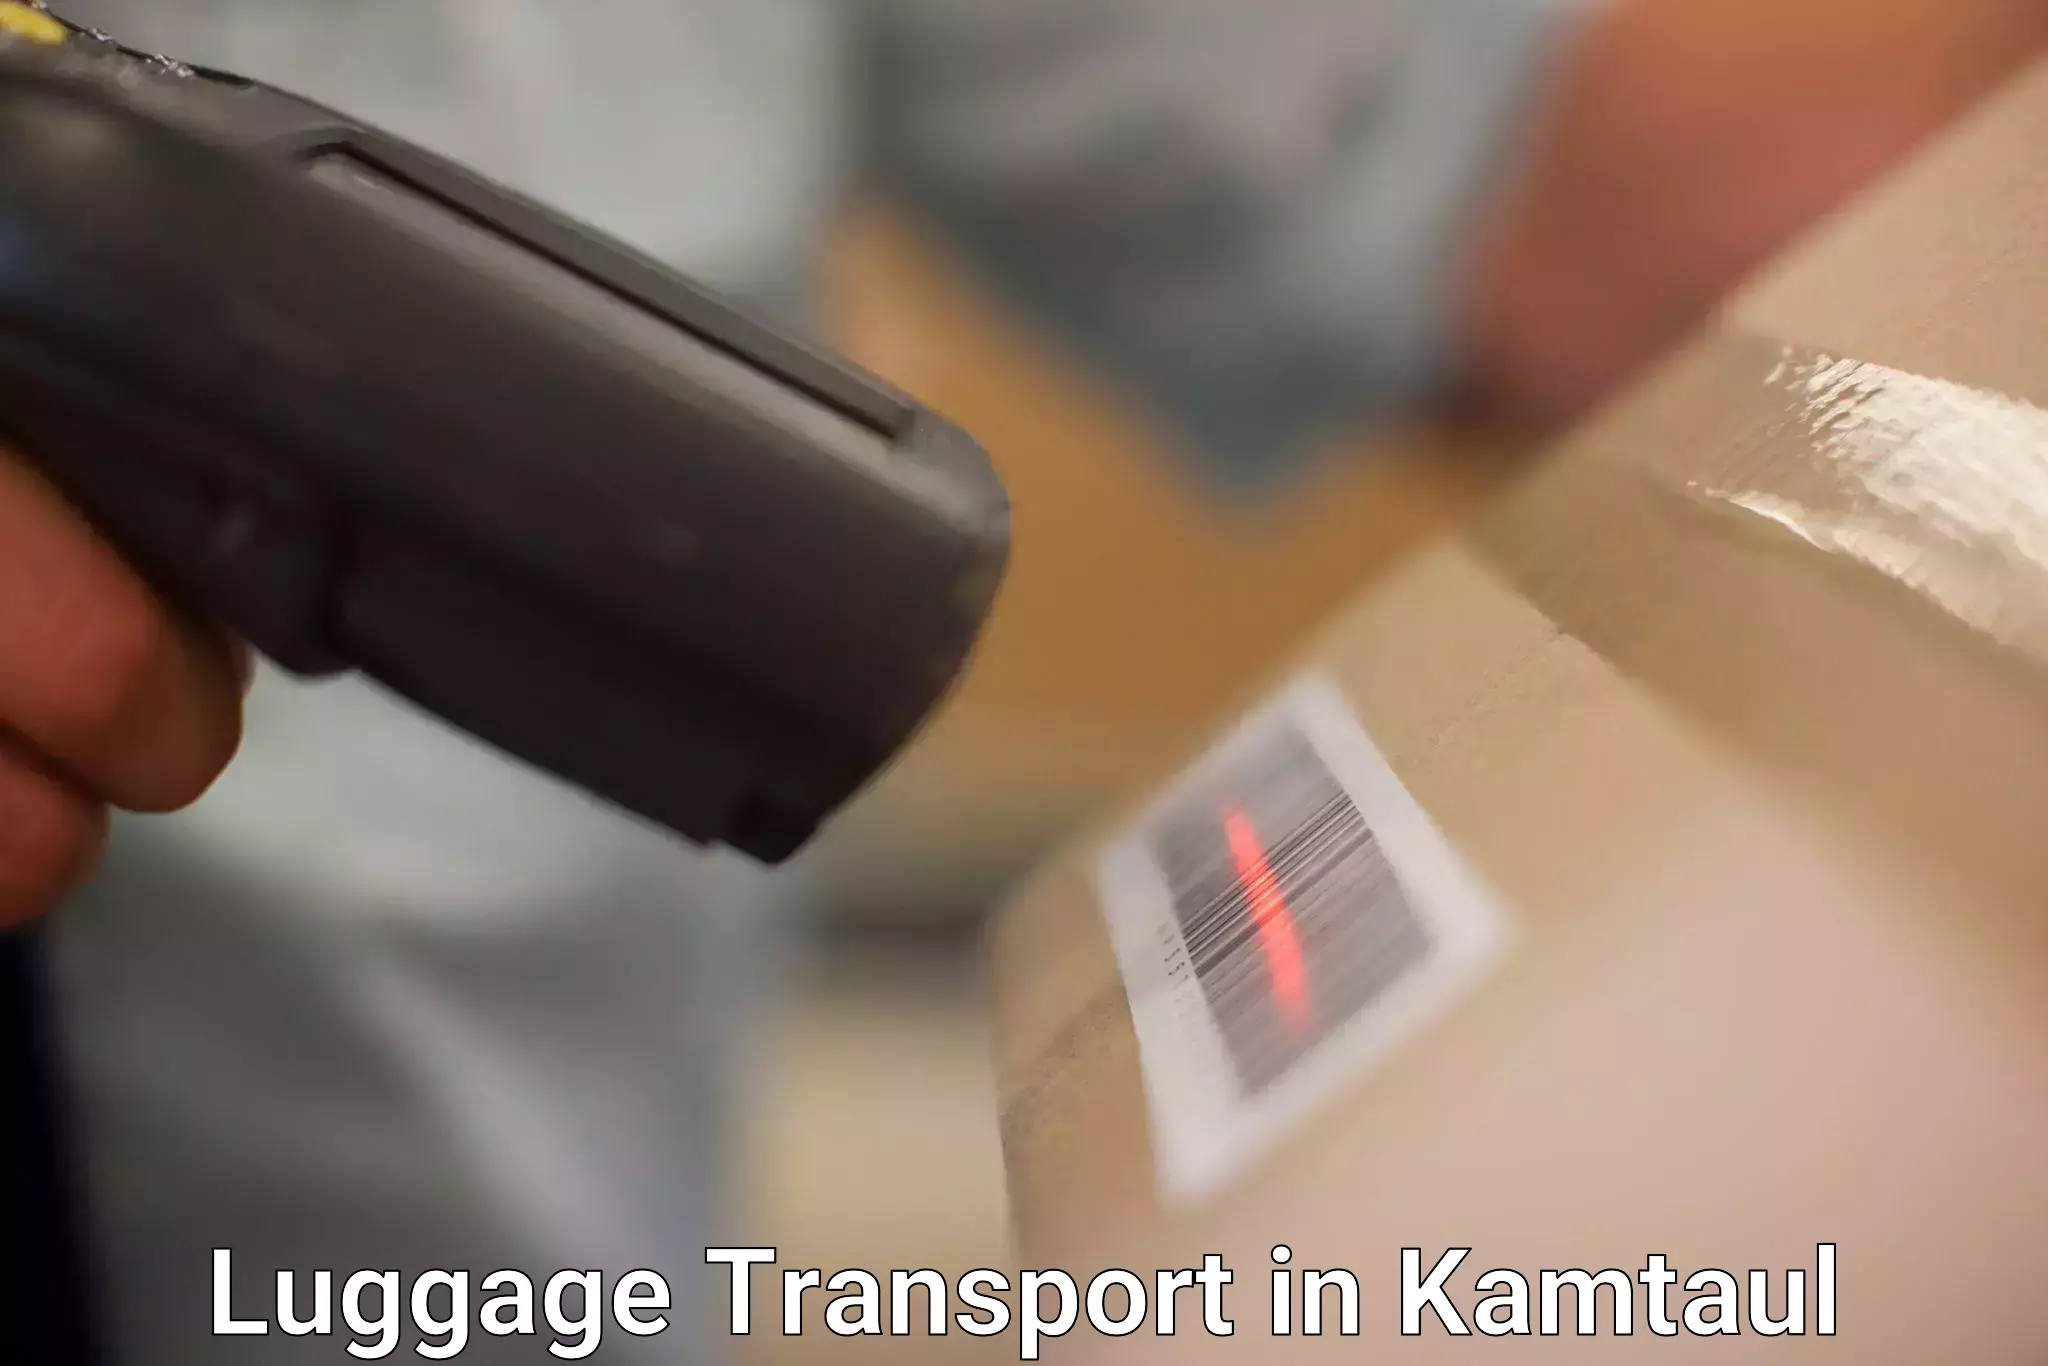 Baggage transport estimate in Kamtaul